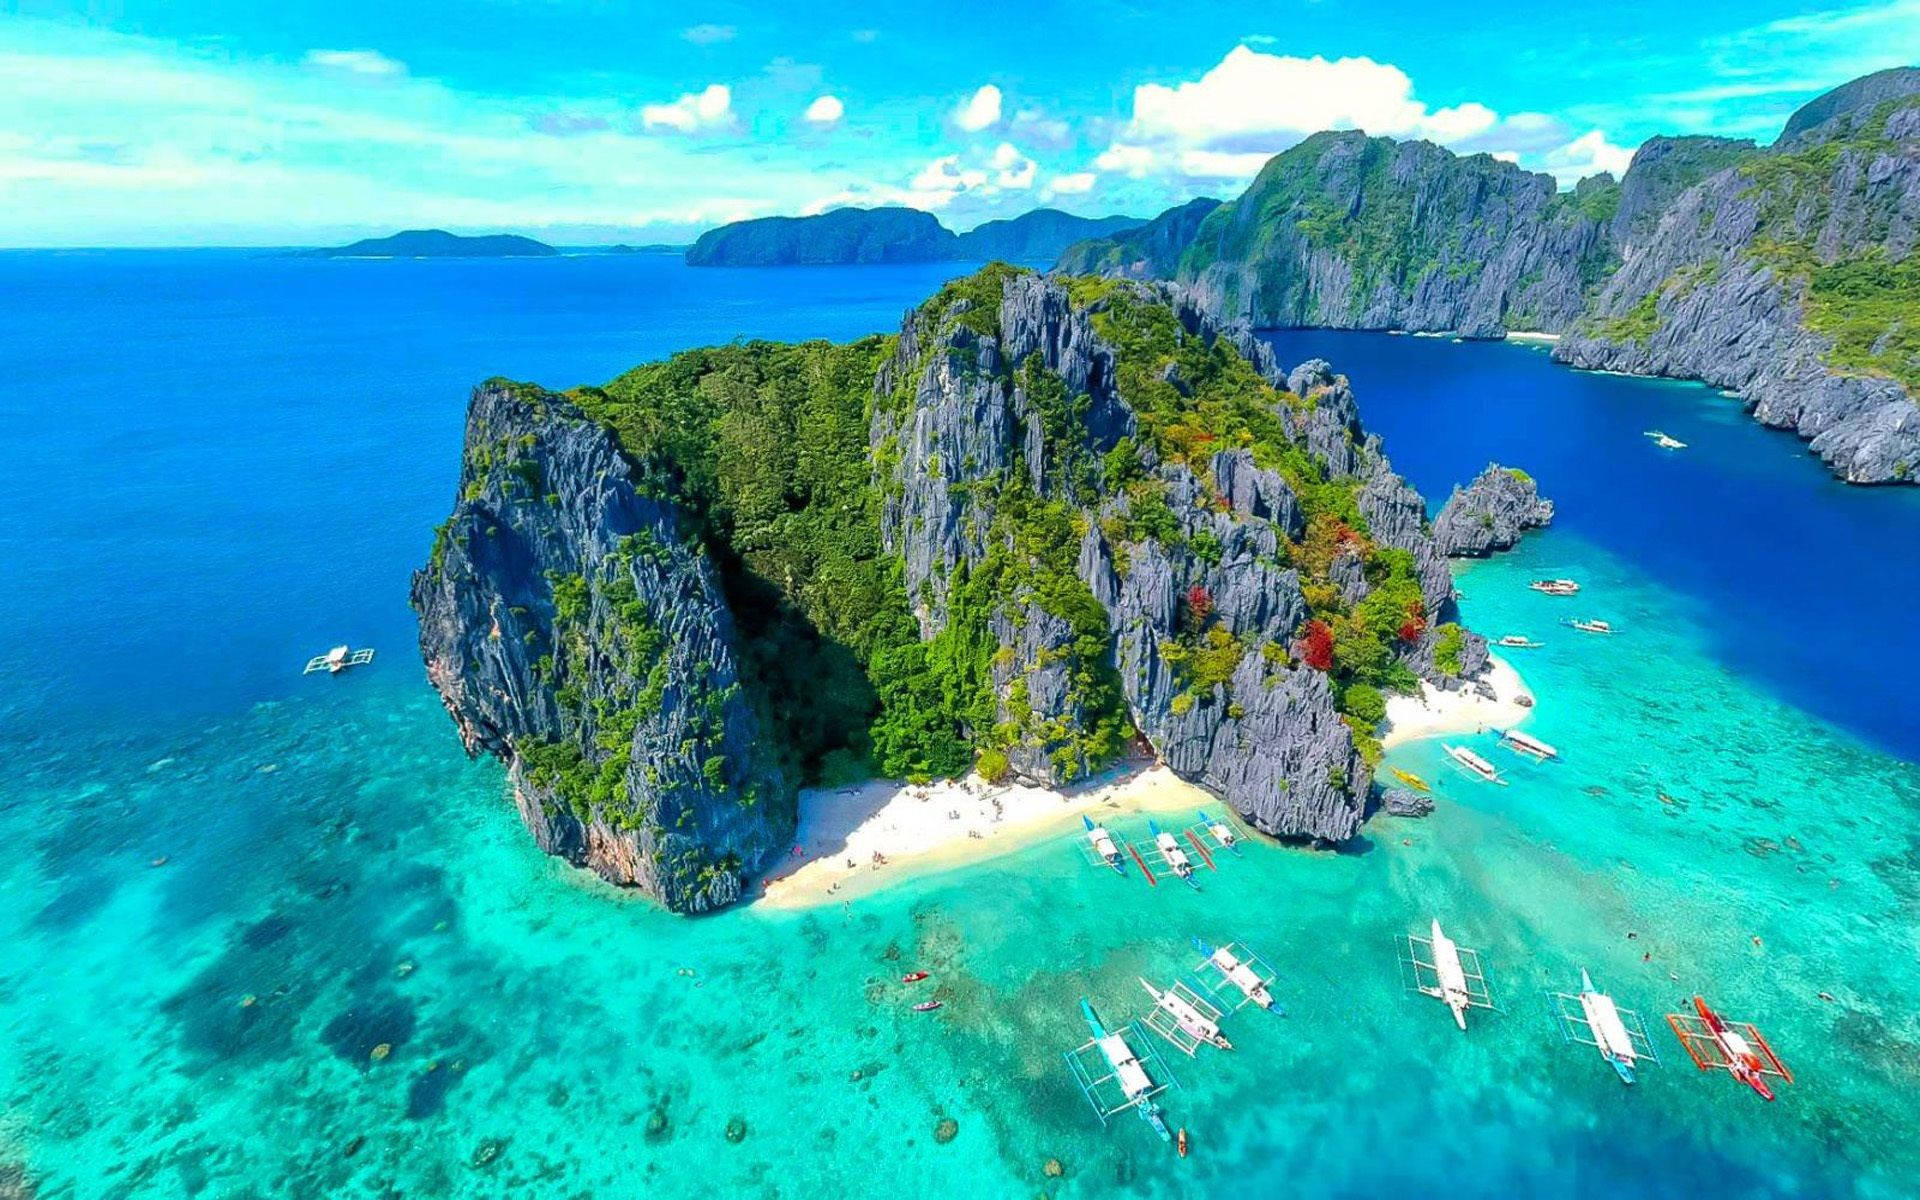 Palawan Asia's Best Island Background